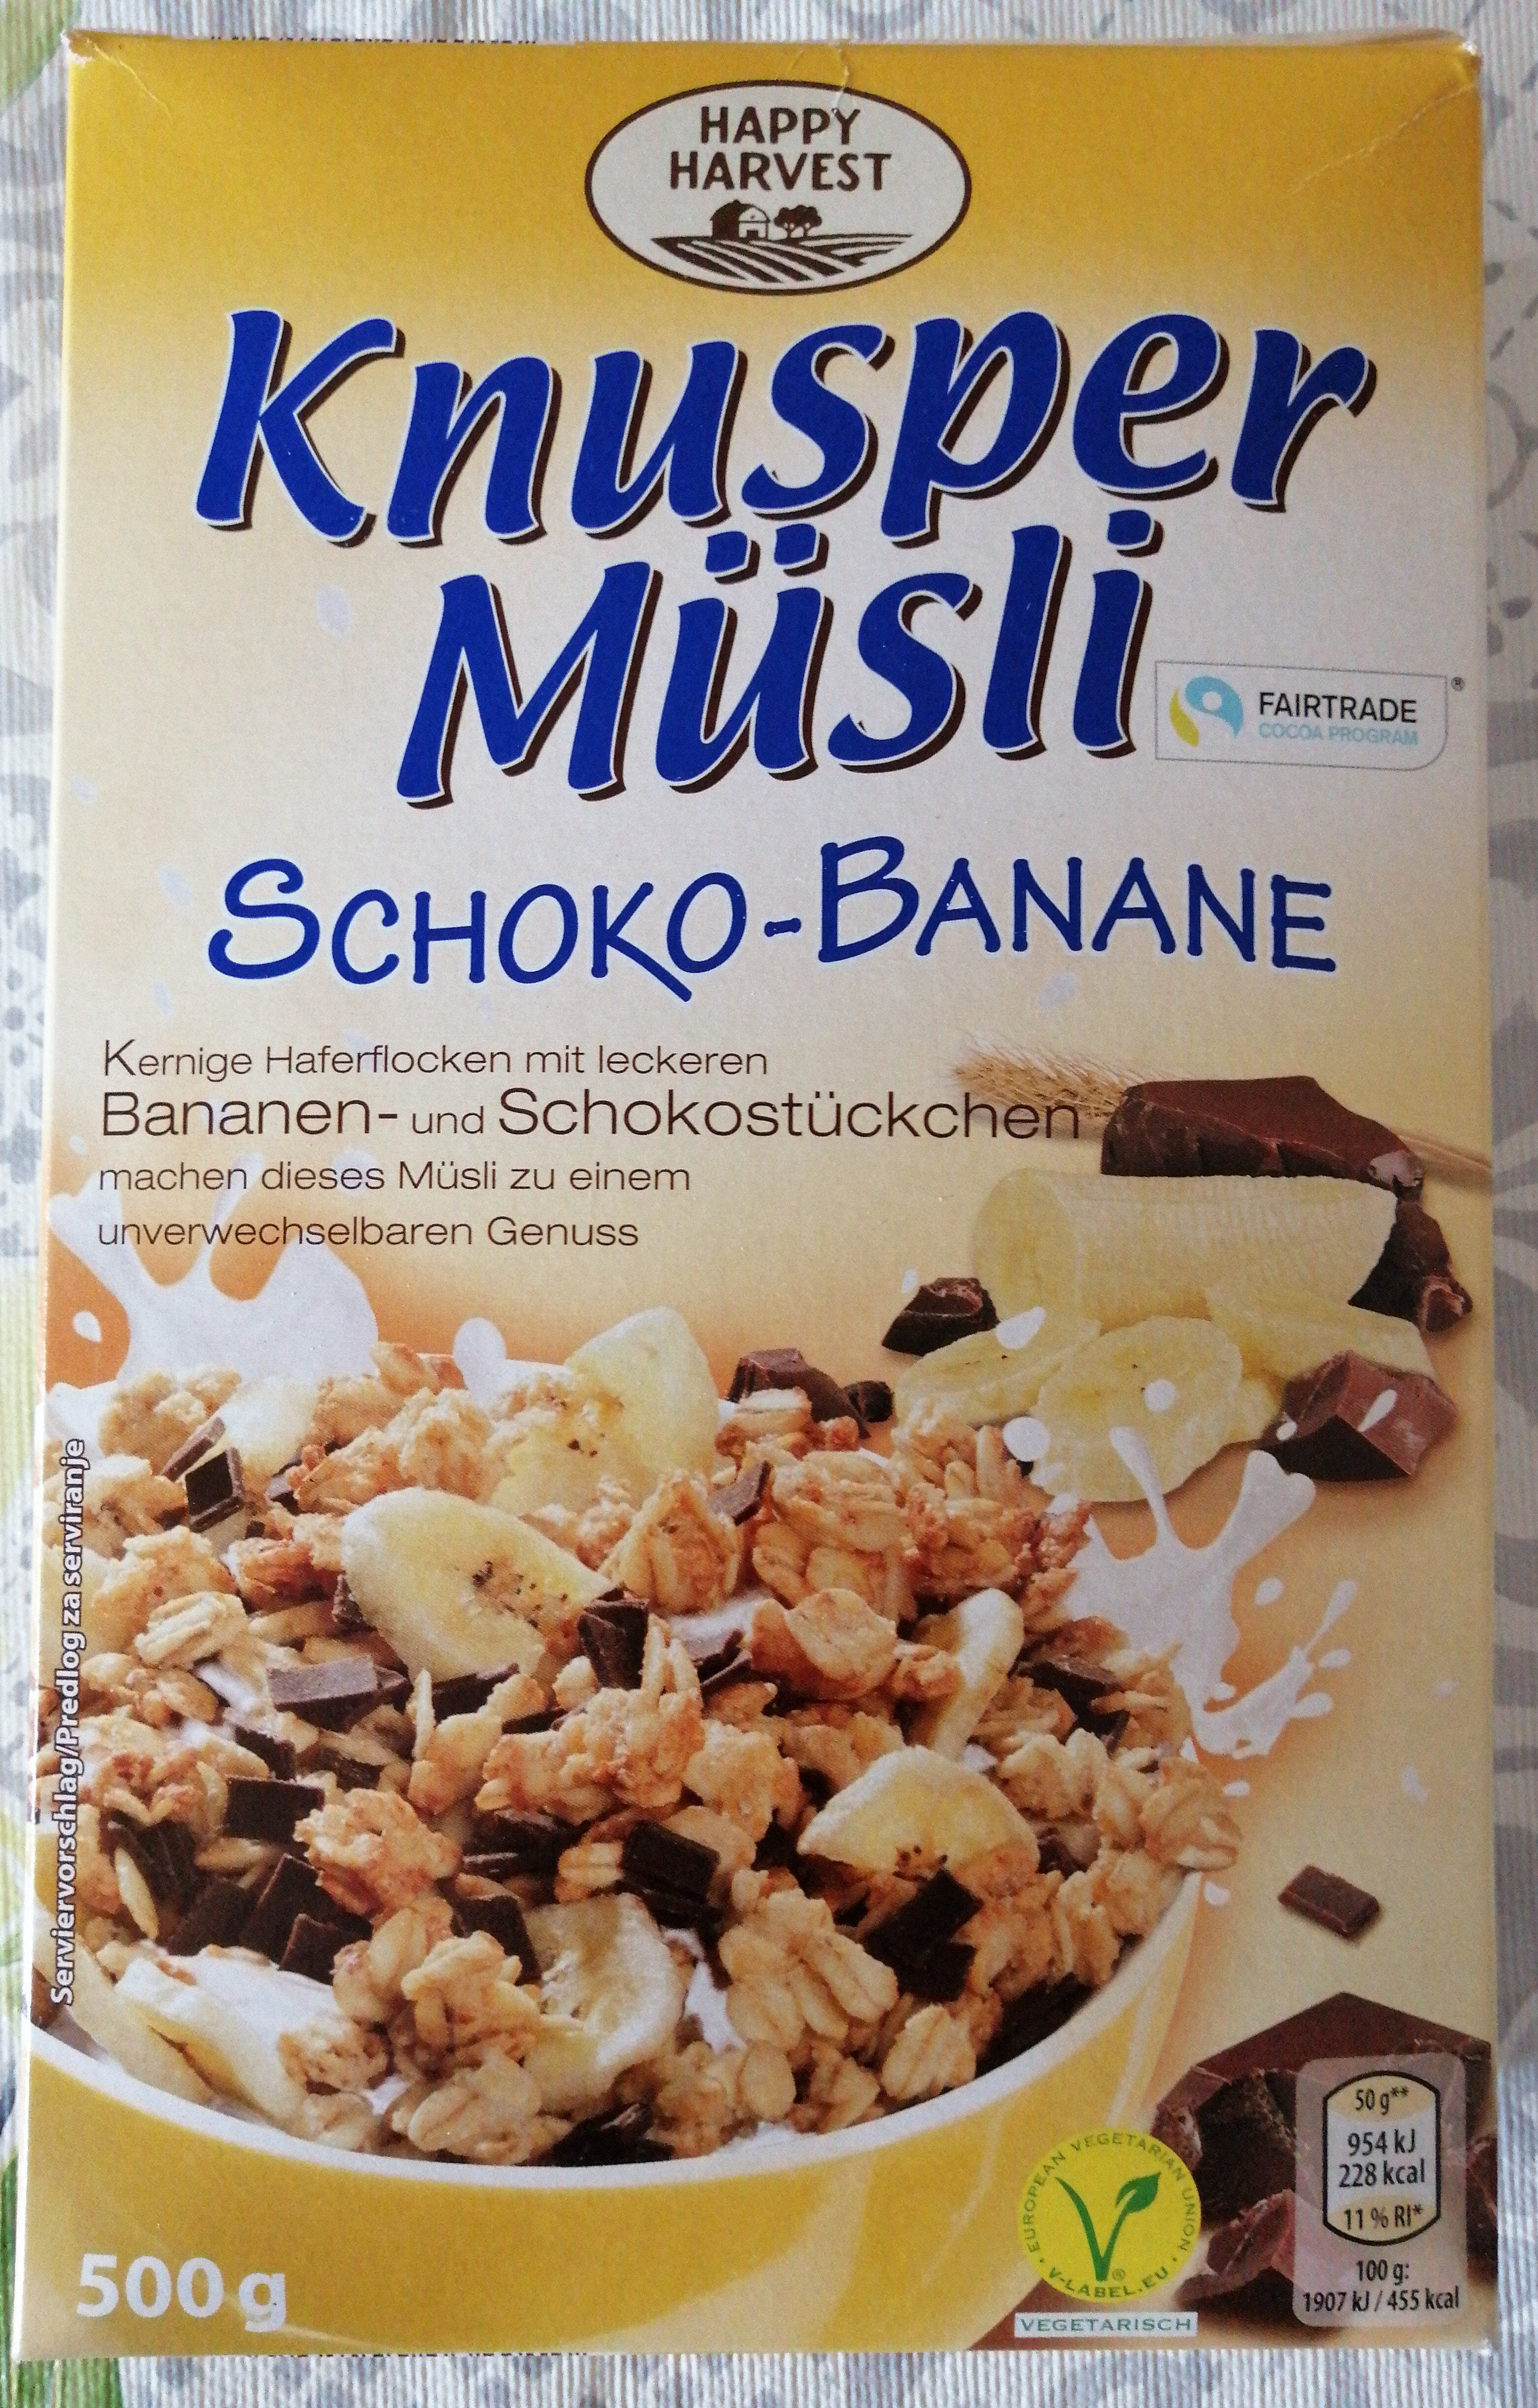 Knusper misli - schoko-banane - Product - sl